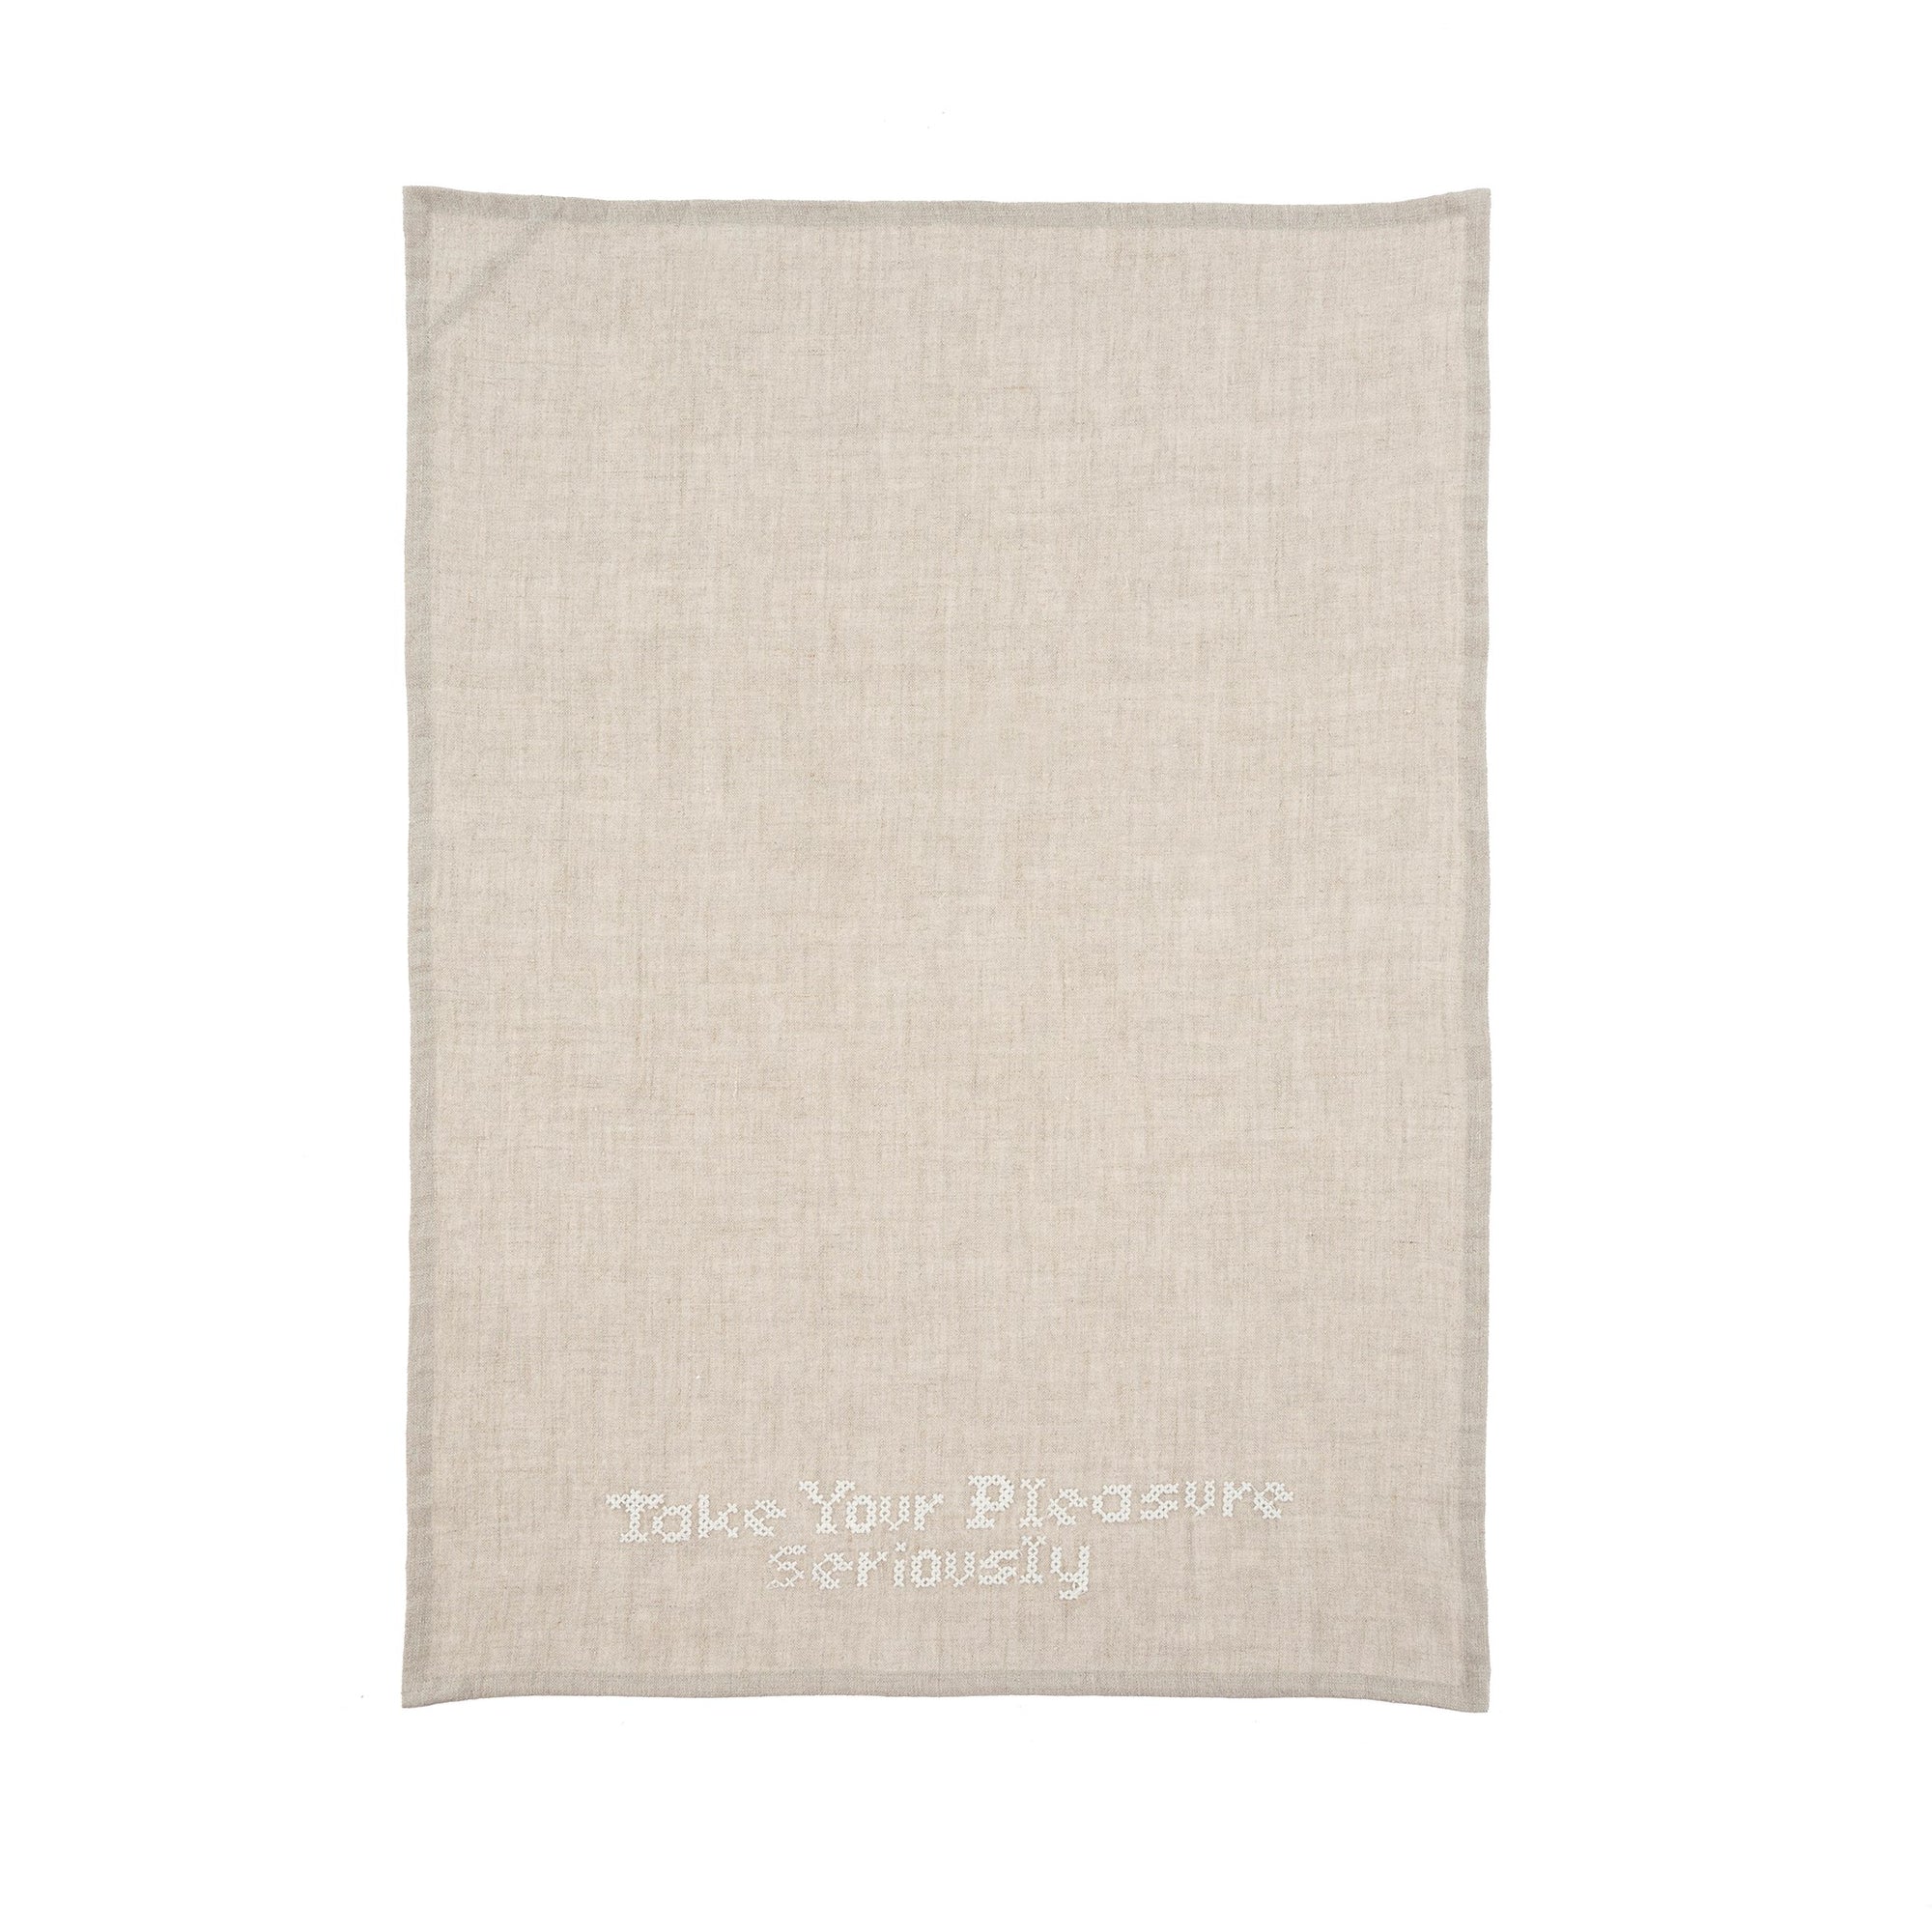 Take Your Pleasure Seriously - Linen Tea Towel